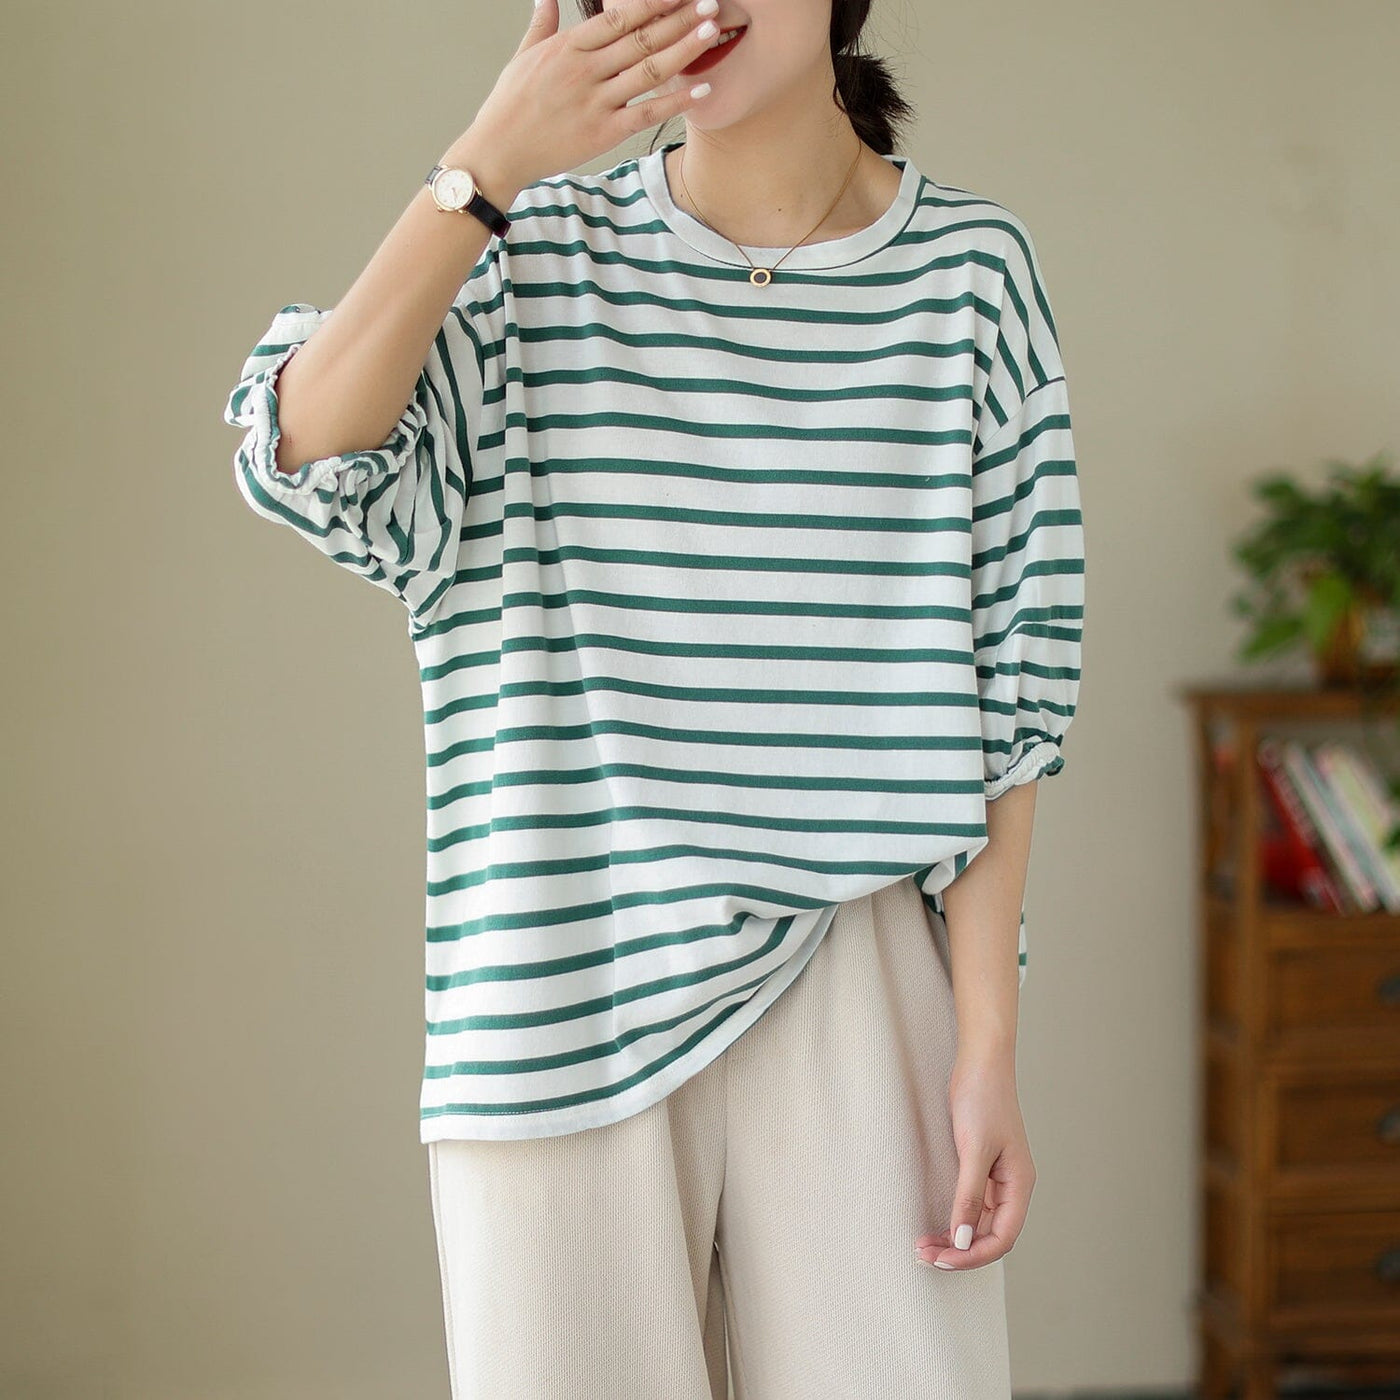 Women Summer Minimalist Stripe Casual T-Shirt